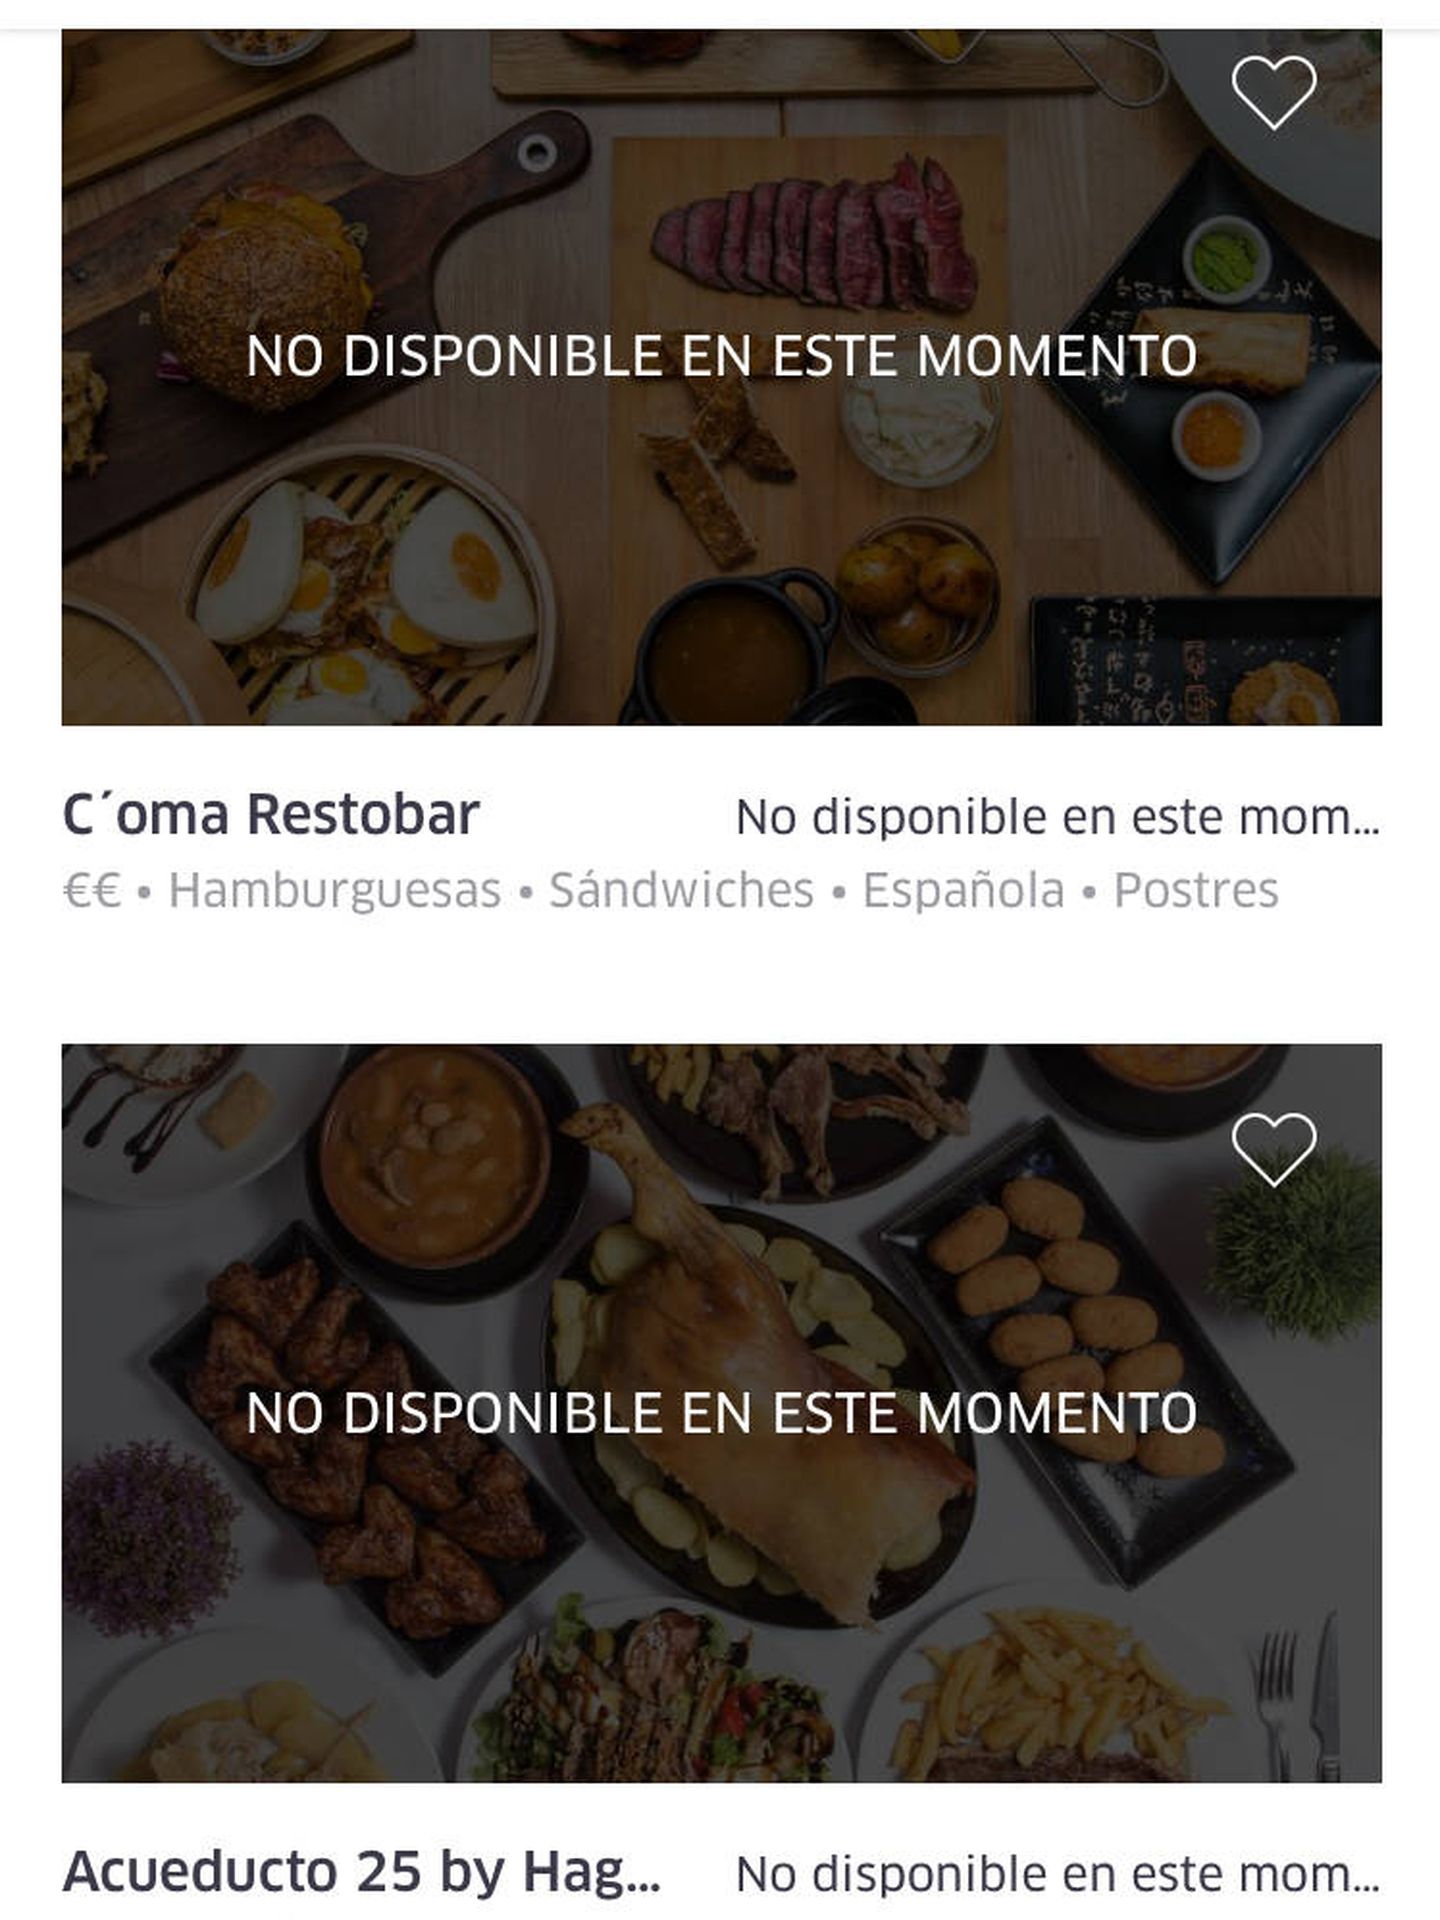 Ambos restaurantes aparecen como cerrados en Uber Eats Segovia.